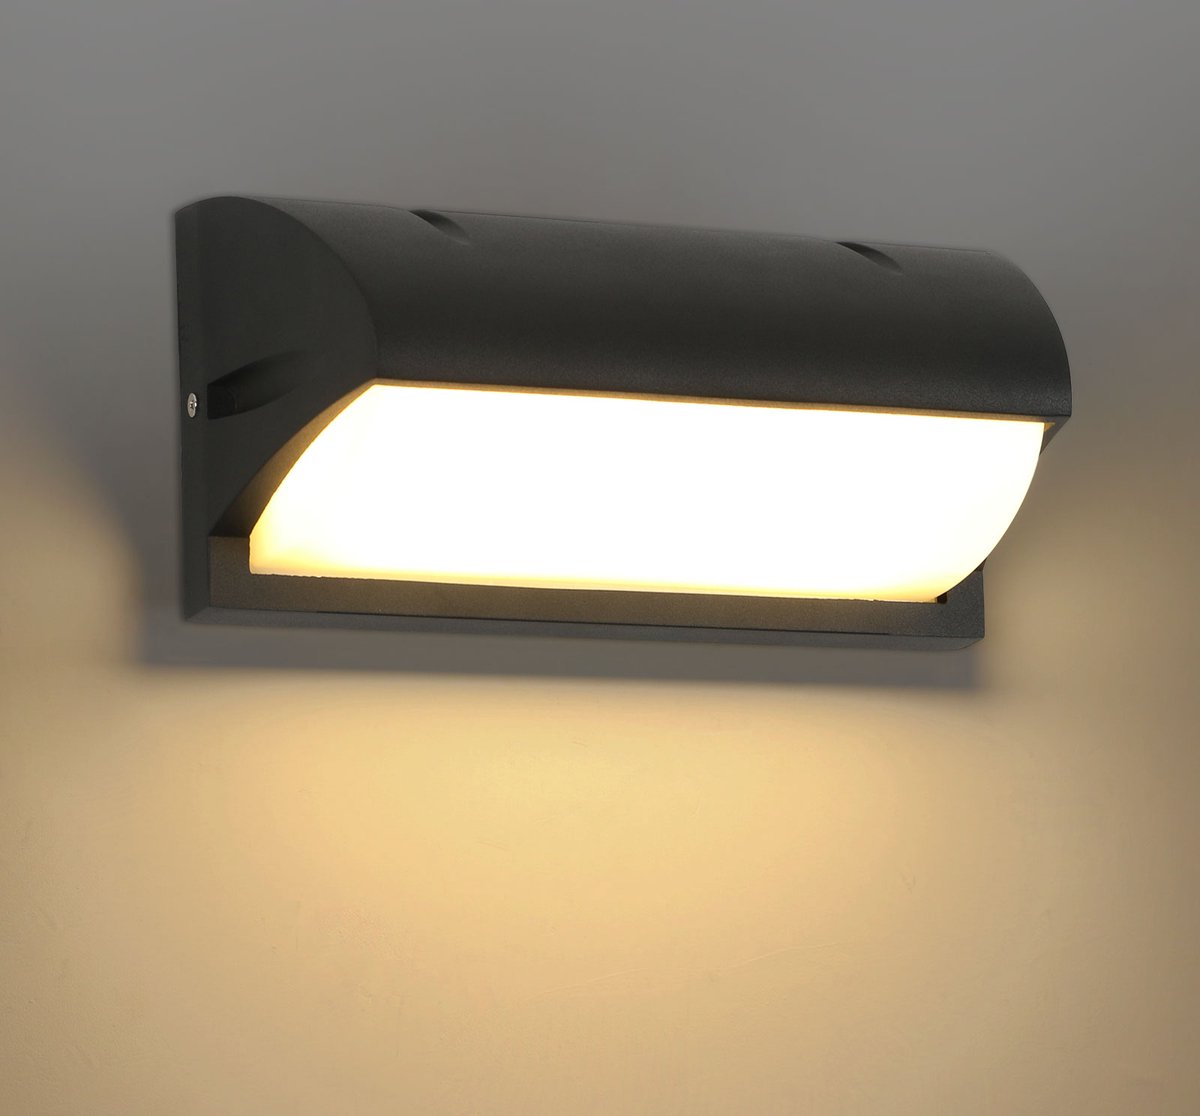 Delaveek-Moderne LED-buitenwandlamp - 18W - IP65 Waterdicht - 3000K Warm Wit- Aluminium